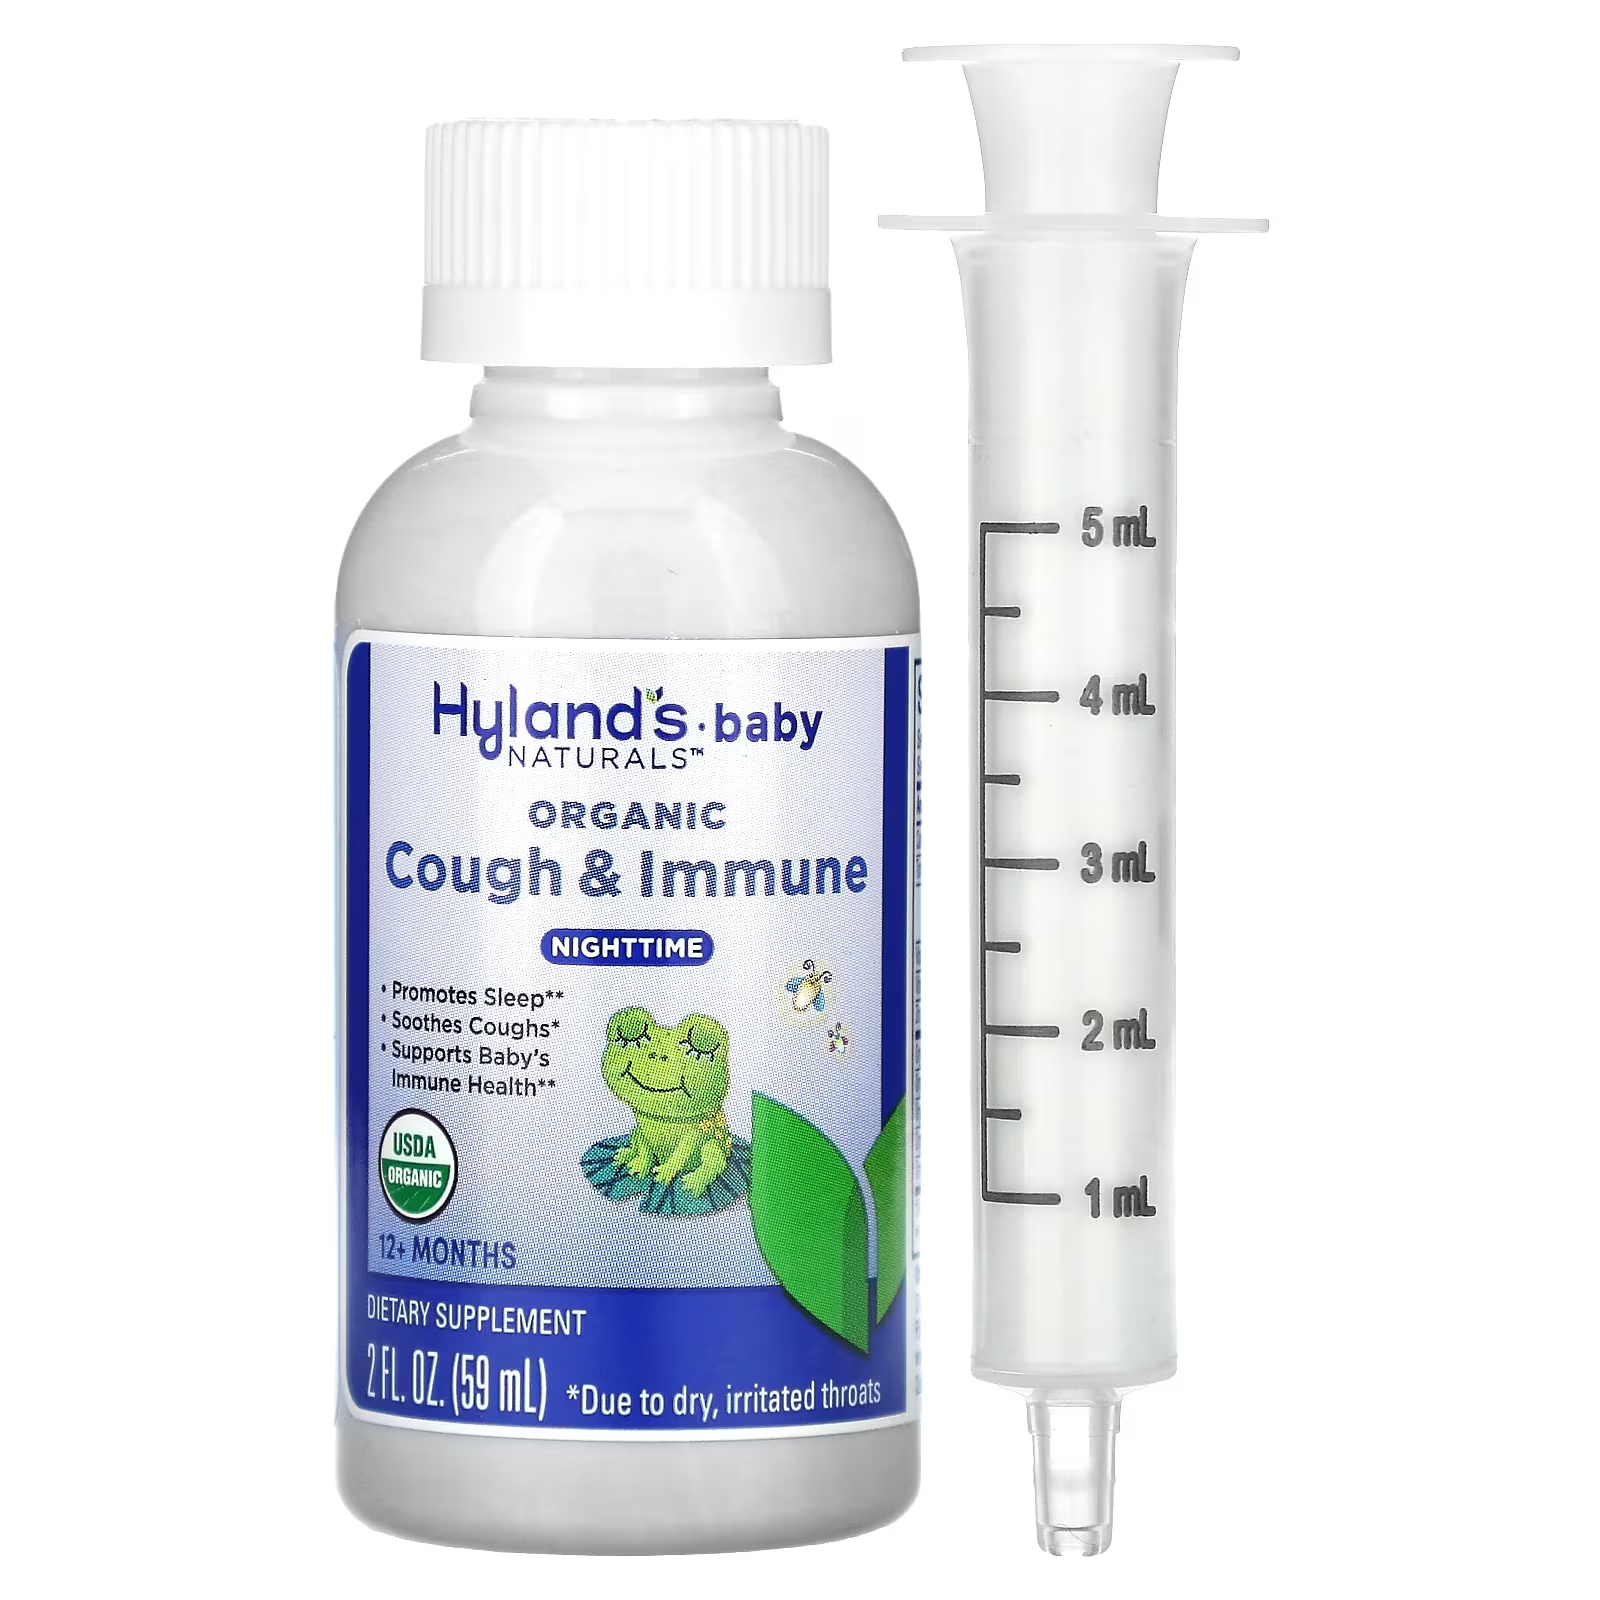 Пищевая добавка Hyland's Naturals Baby Organic Cough & Immune для детей от 12 месяцев, 59 мл